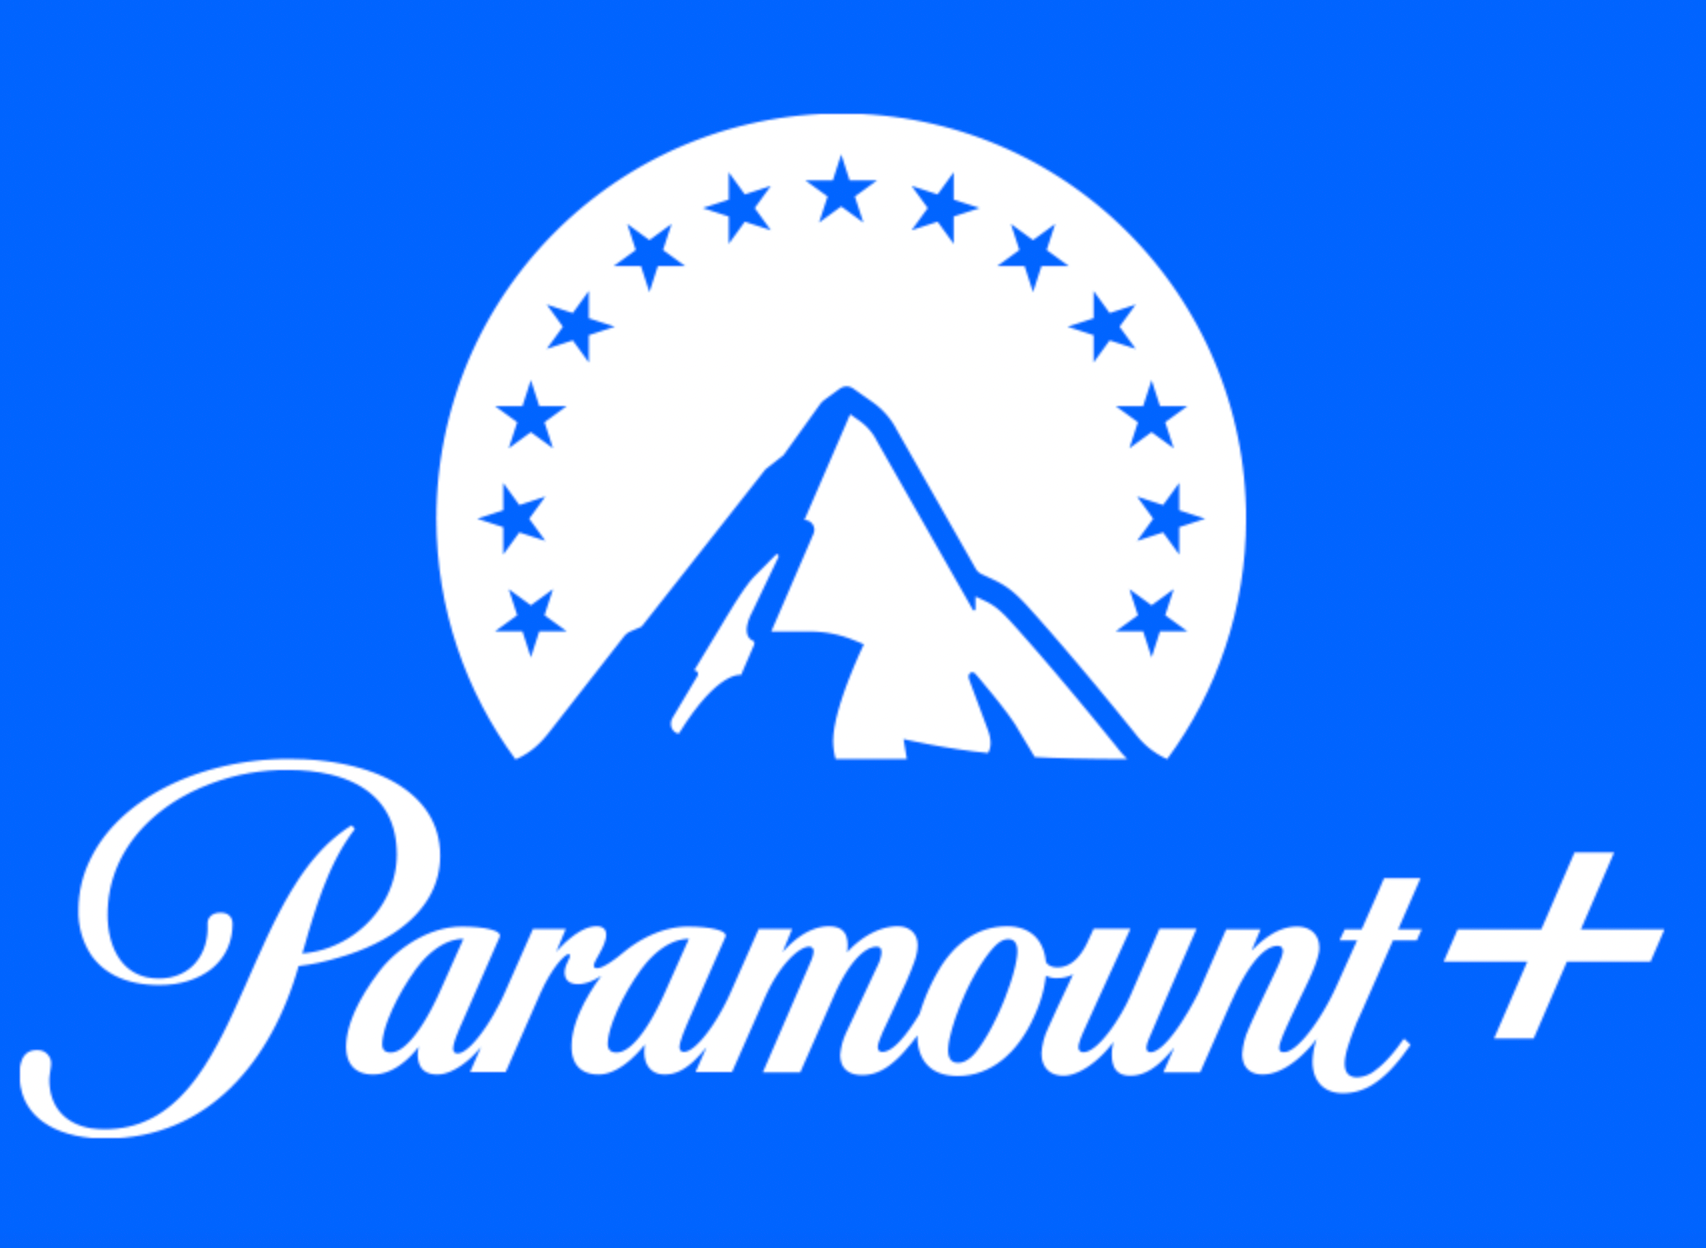 Paramount +